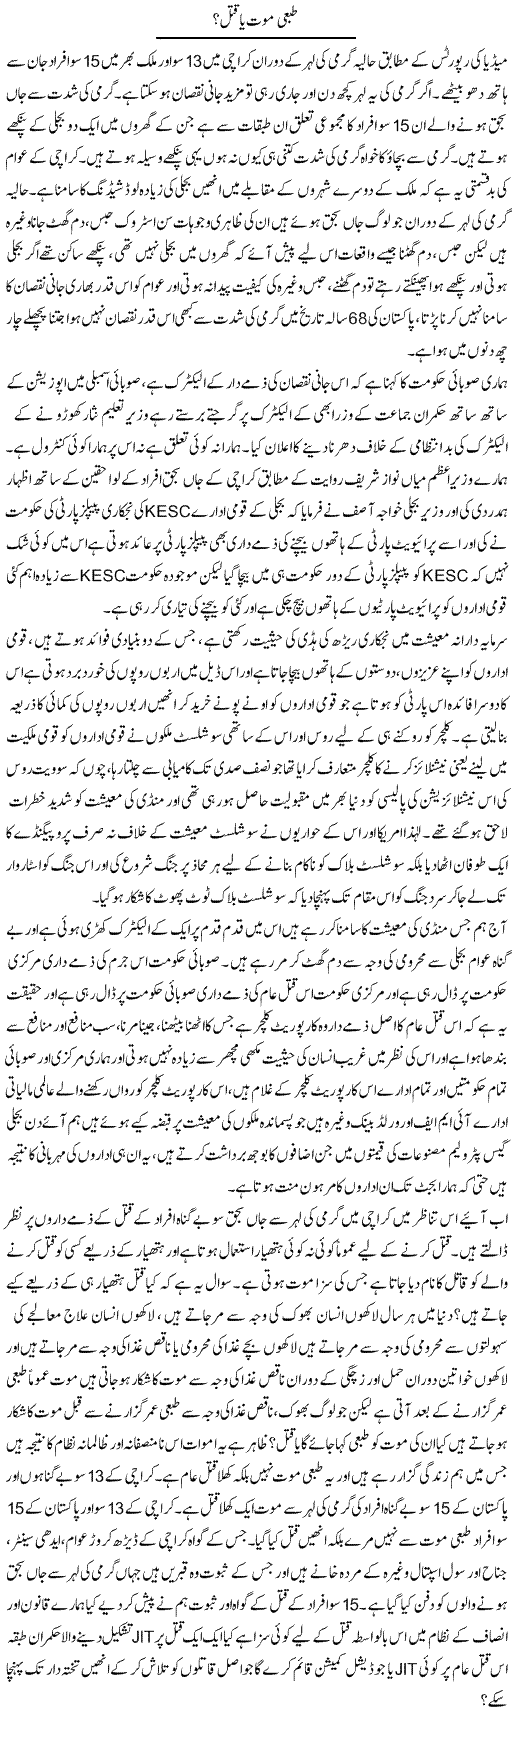 Tabee Mout Ya Qatal? | Zahir Akhter Bedi | Daily Urdu Columns